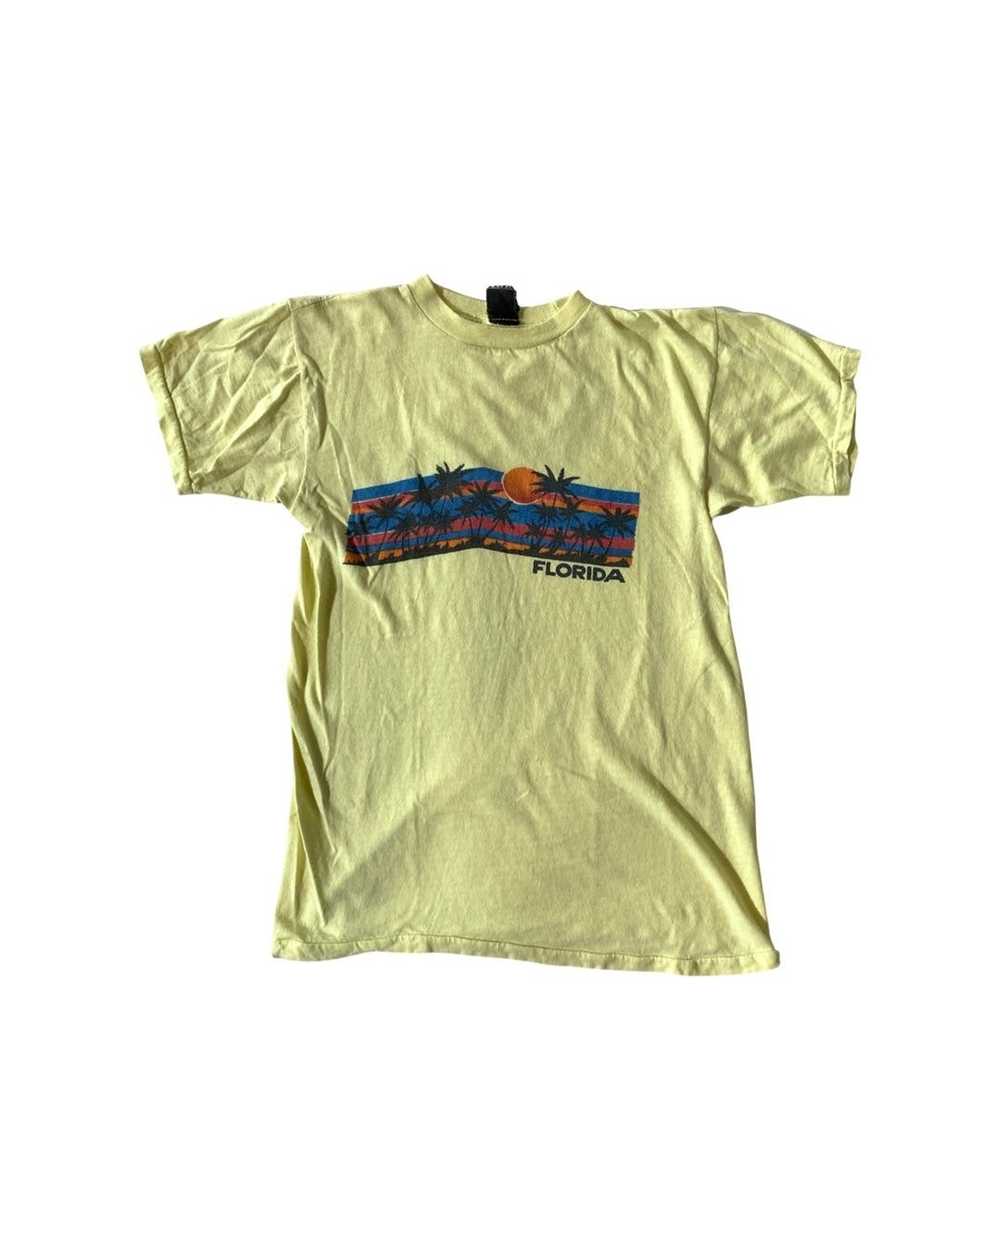 Vintage Vintage Florida Sunset Graphic T-shirt Li… - image 1